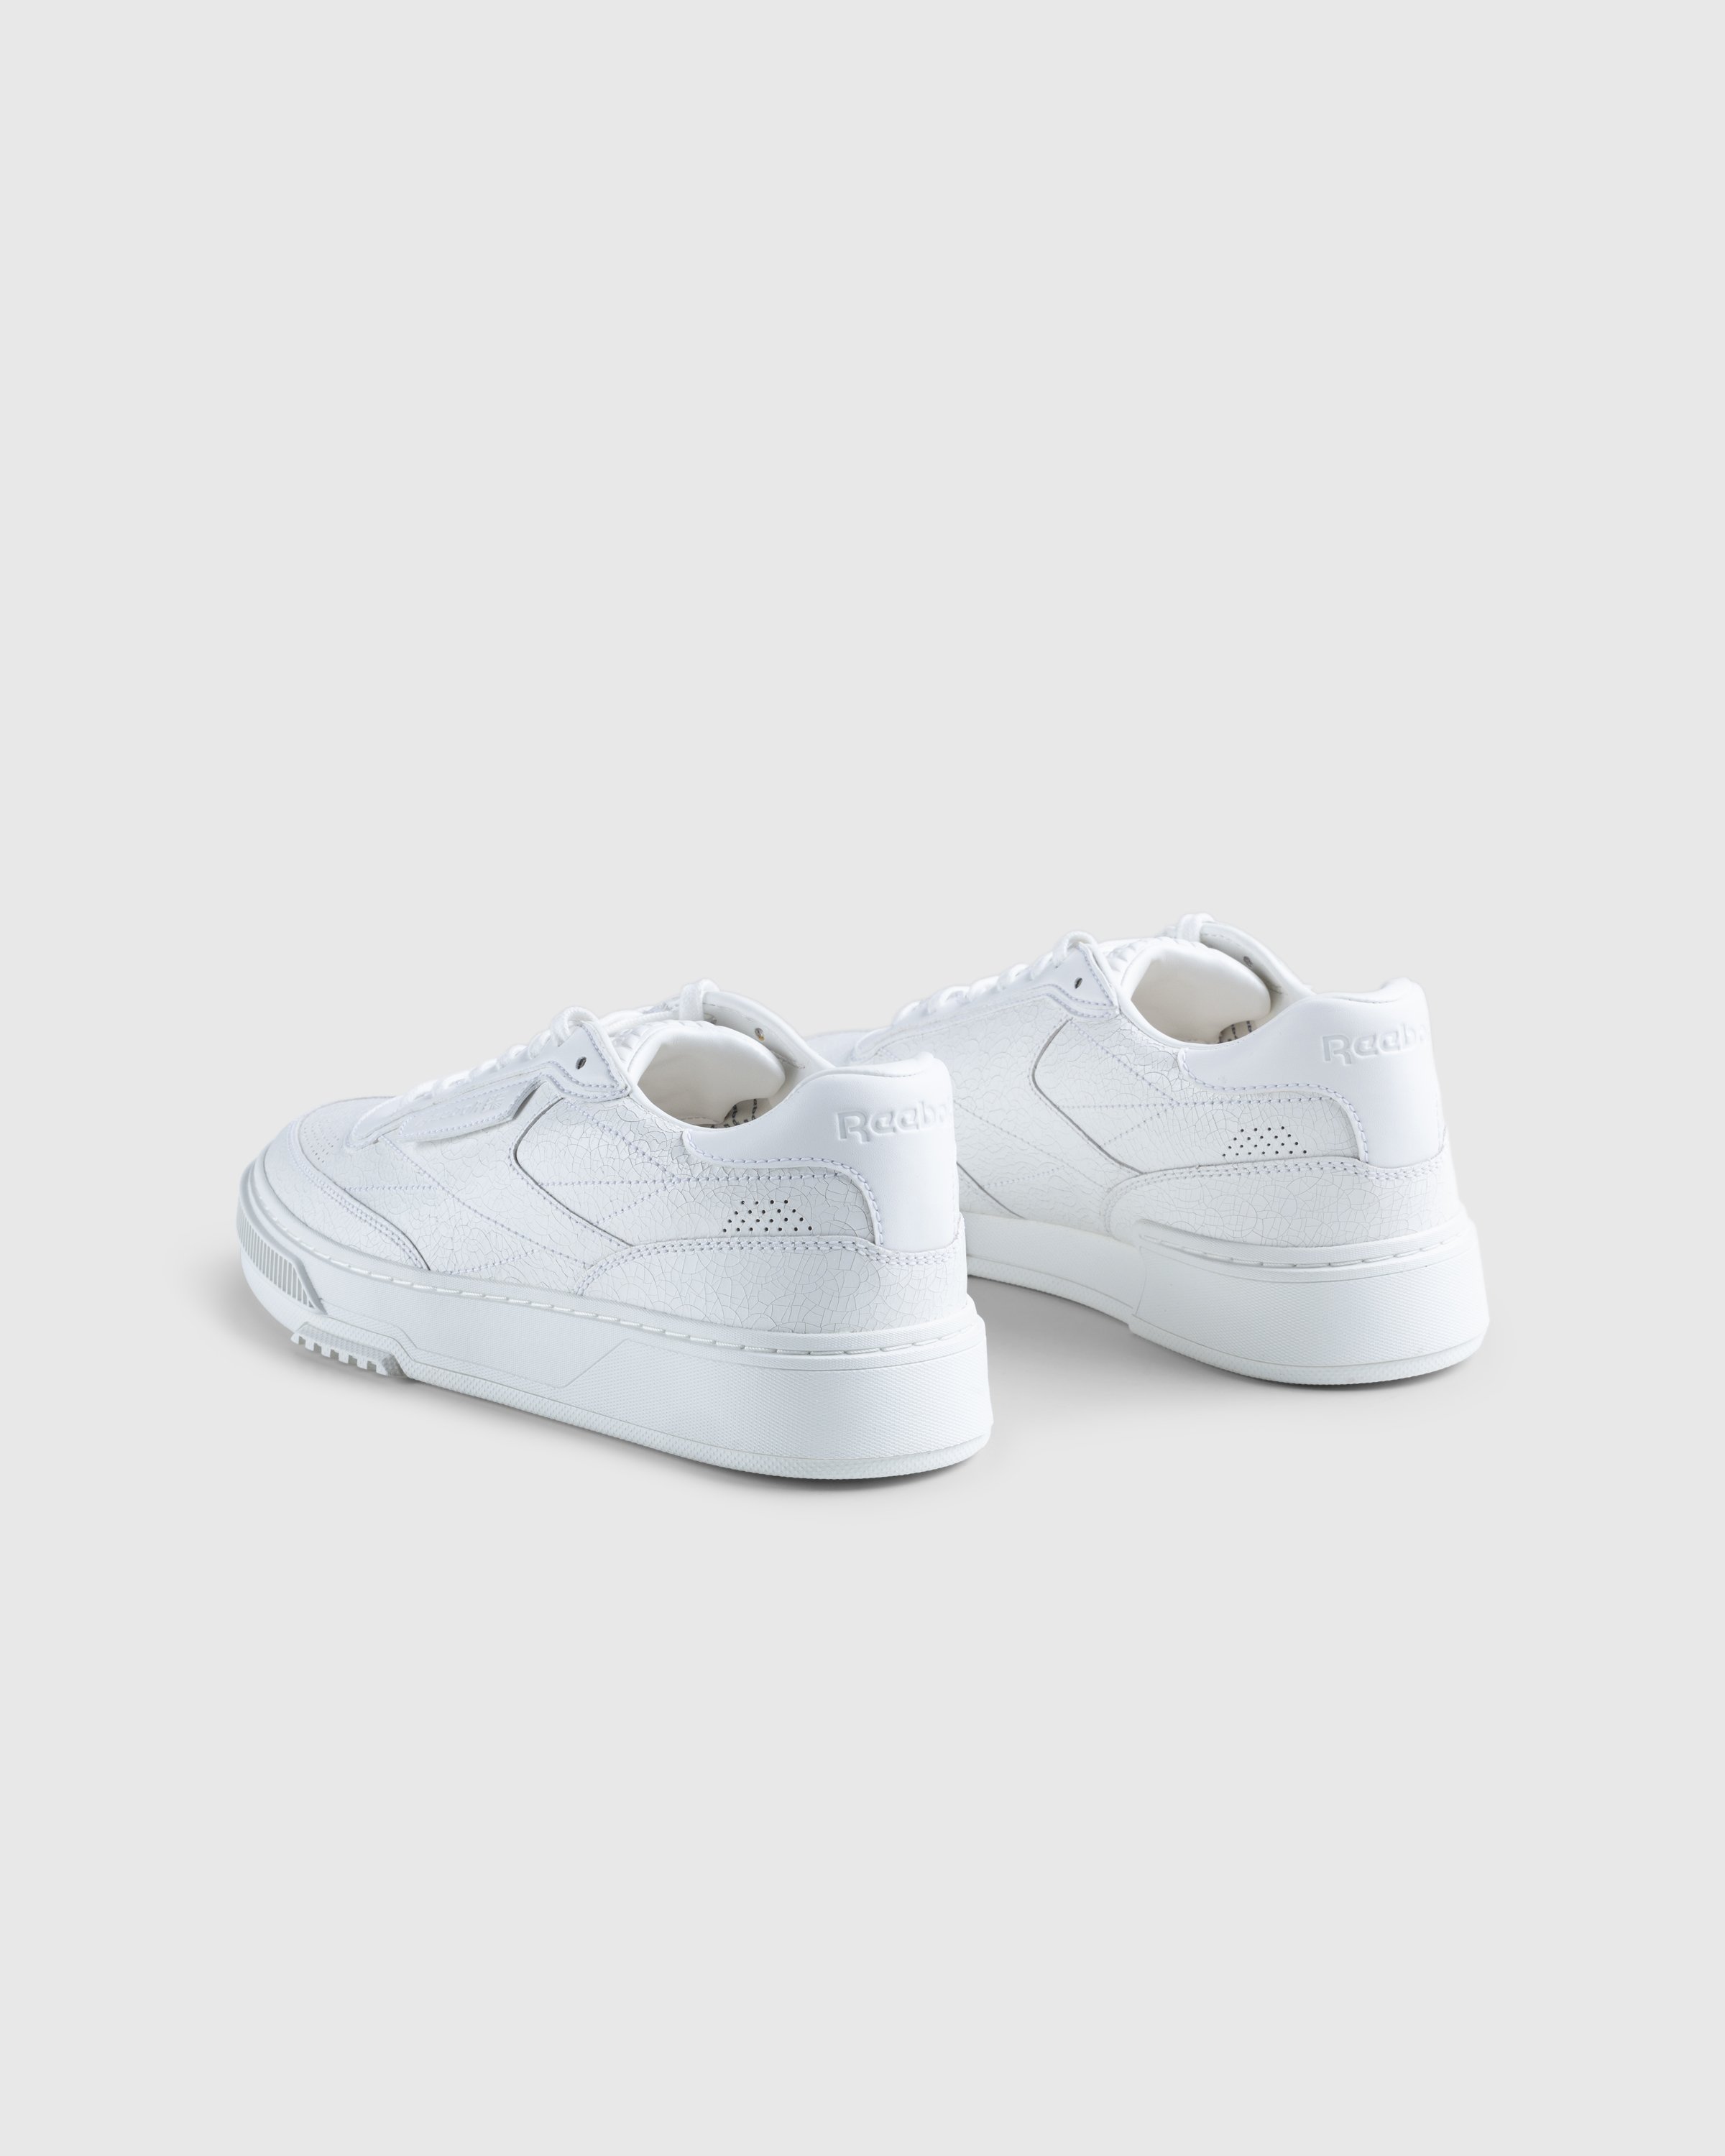 Reebok - Club C Ltd Cracked White White - Footwear - White - Image 4